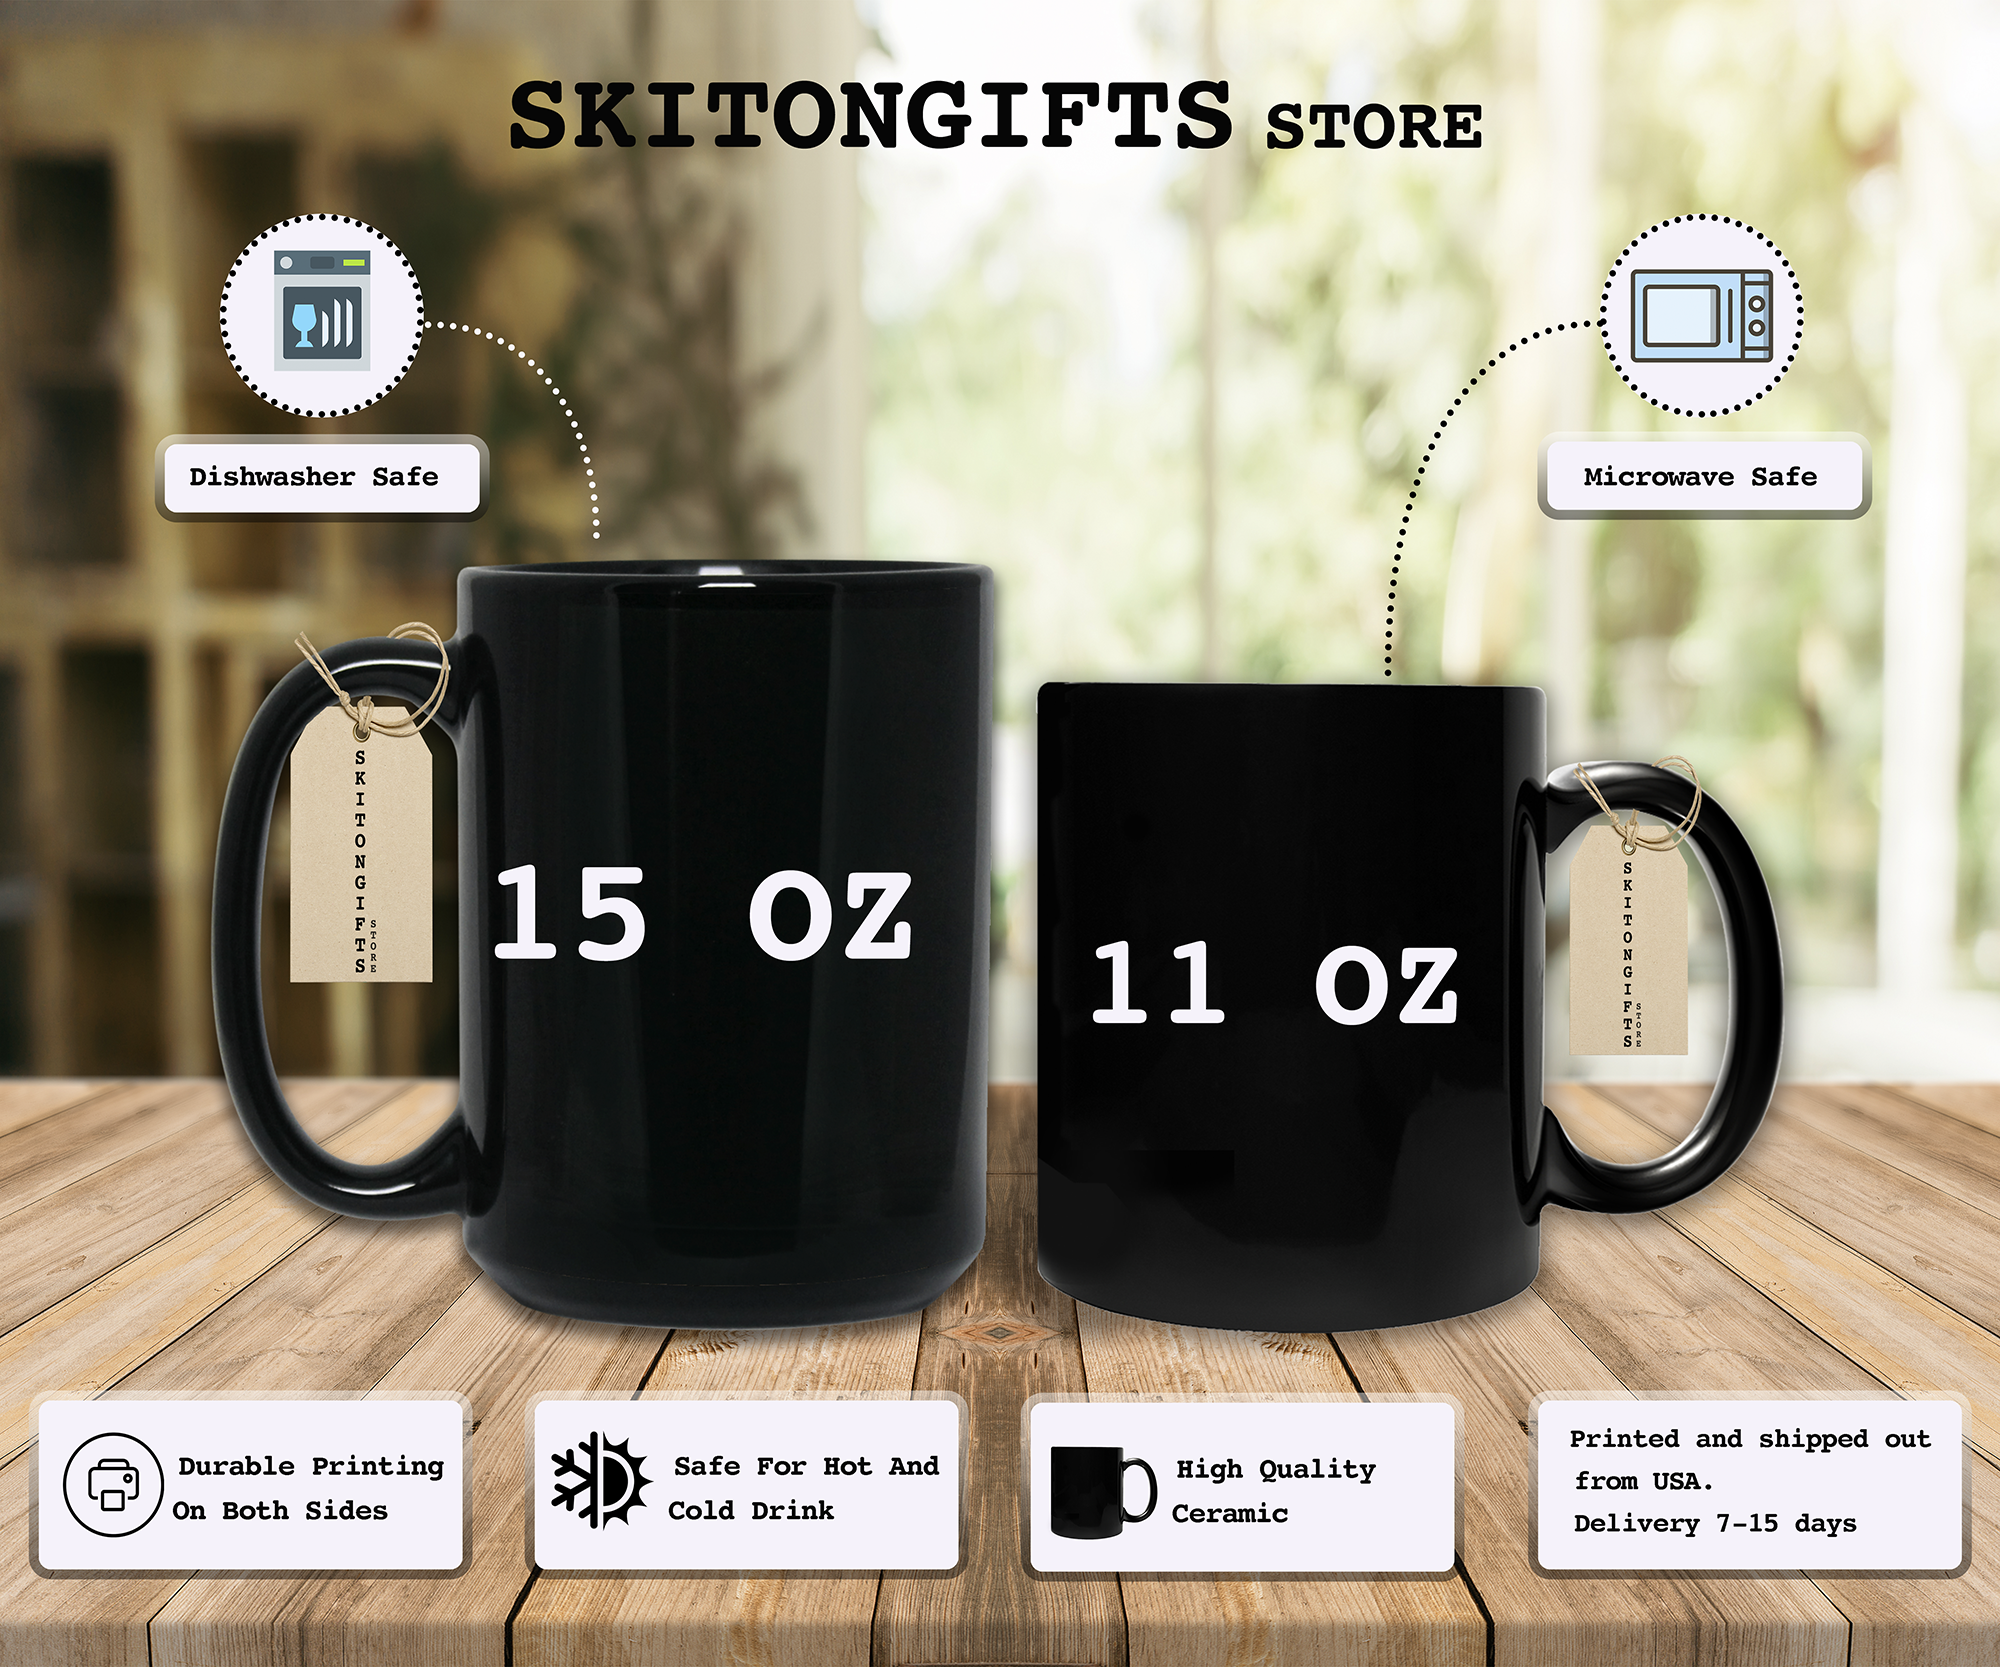 Skitongifts Funny Ceramic Novelty Coffee Mug You Just Got Litt Up mPbHHmo